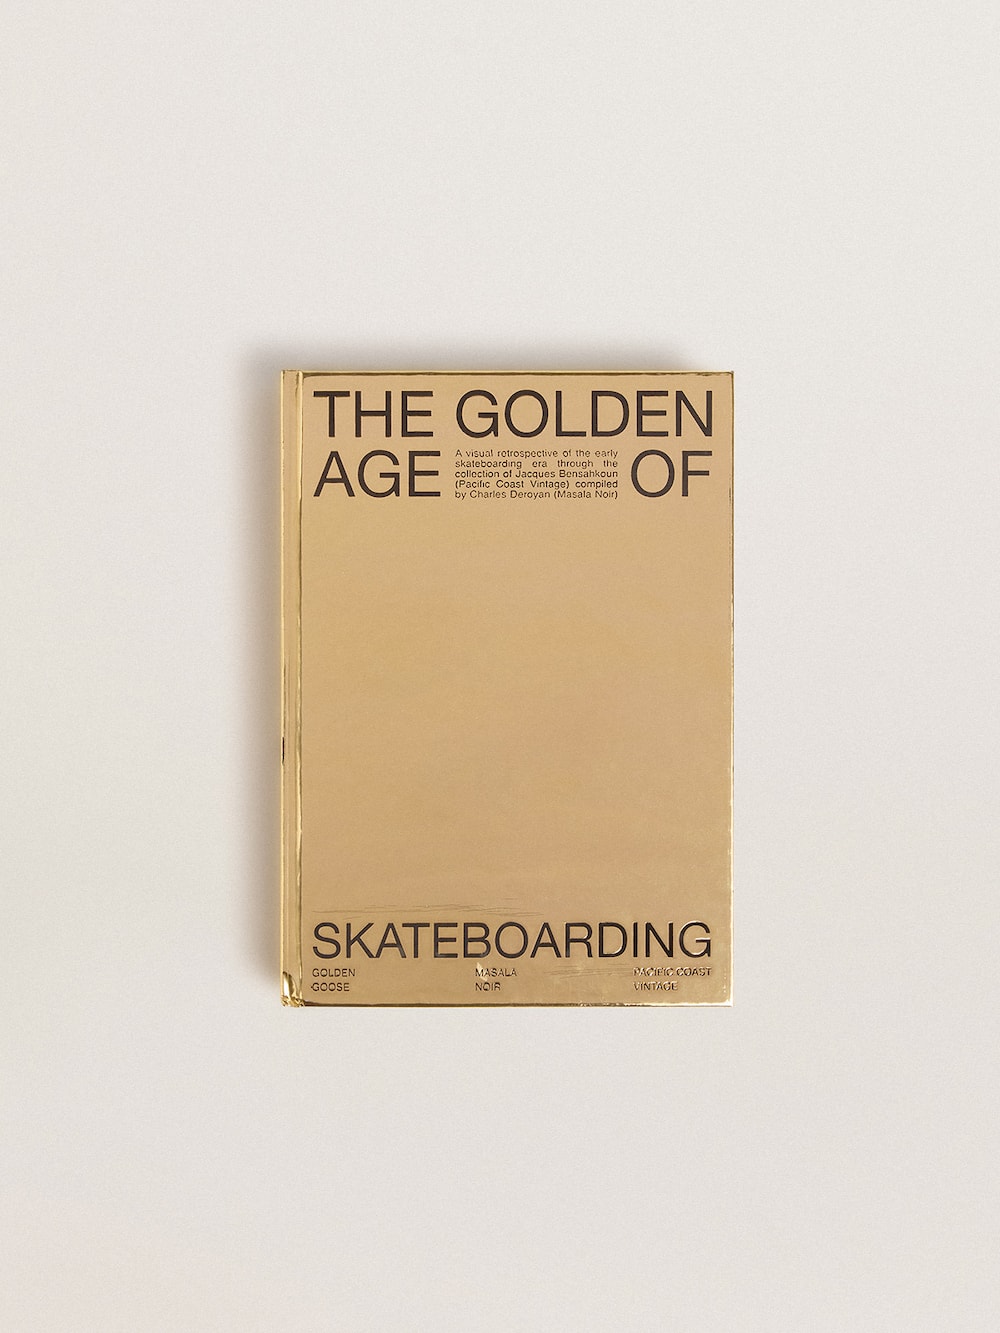 Golden Goose - “The Golden age of Skateboarding” 드림드 바이 퍼시픽 코스트 빈티지 & 마살라 누아르 독점적인 하우스(HAUS) 오브 드리머스 in 